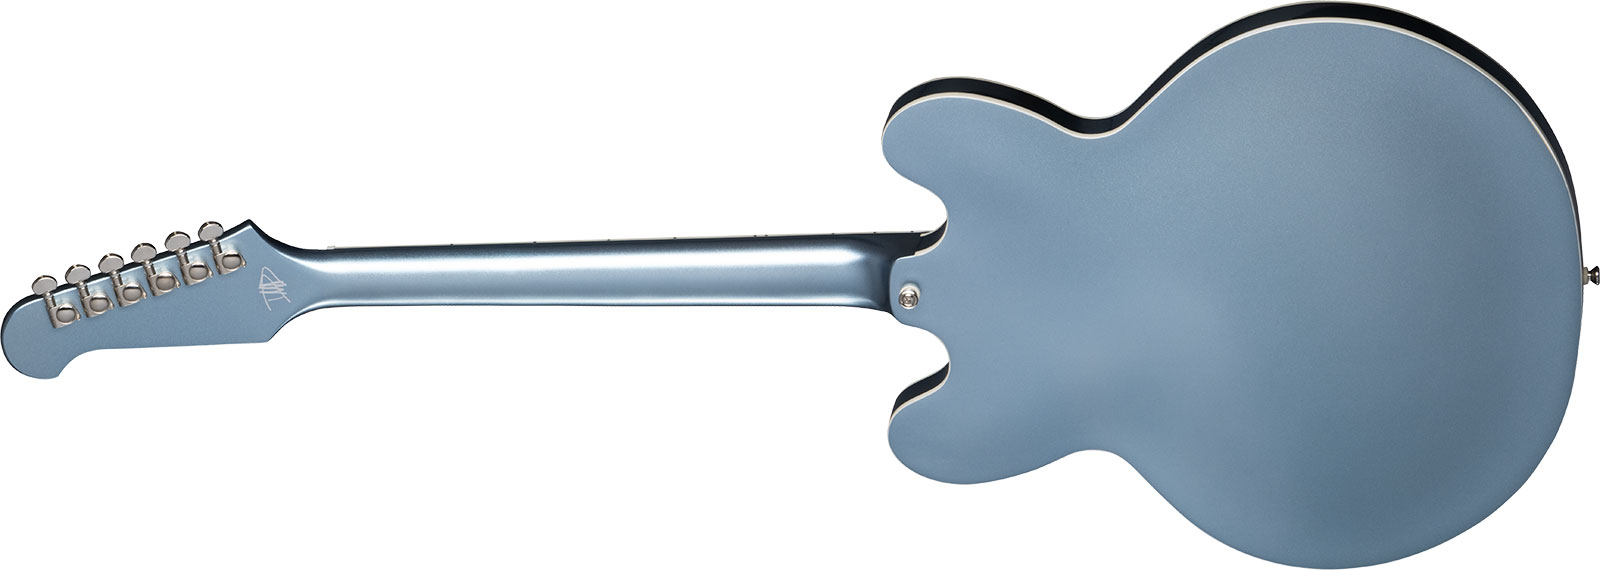 Epiphone Dave Grohl Dg-335 Signature 2h Ht Lau - Pelham Blue - Semi-Hollow E-Gitarre - Variation 1